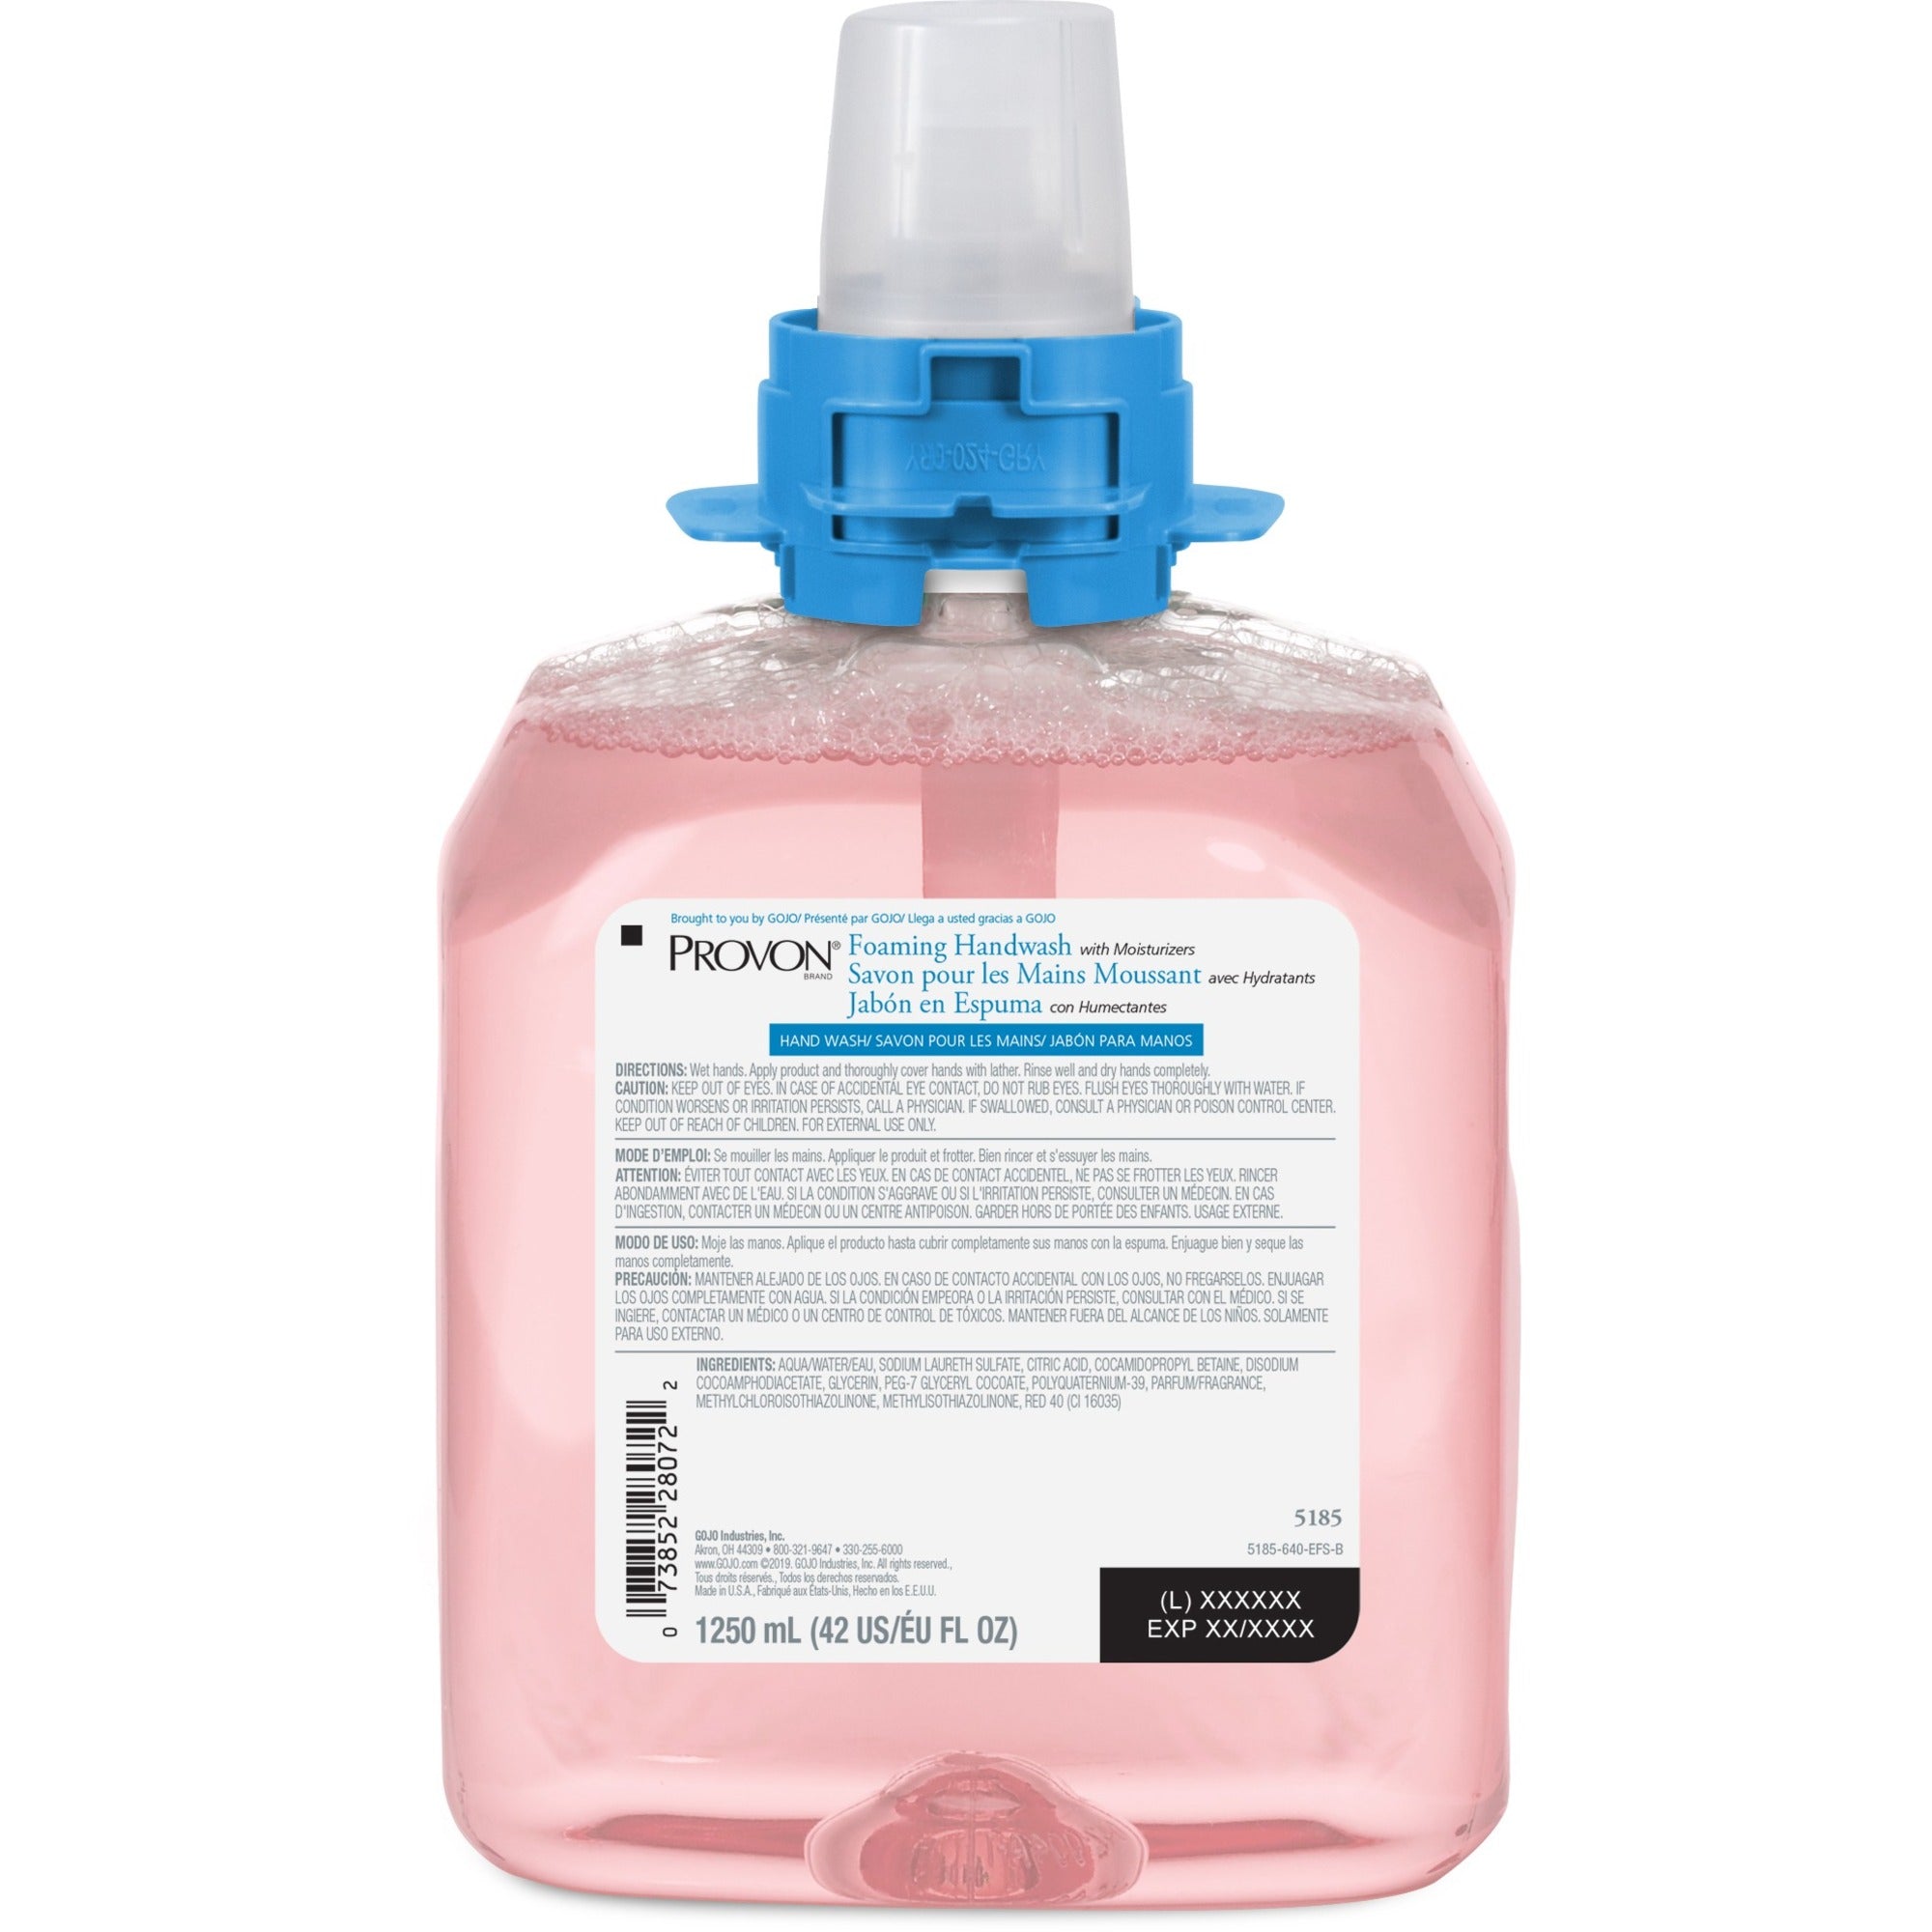 provon-fmx-12-refill-foaming-handwash-cranberry-scentfor-423-fl-oz-1250-ml-kill-germs-hand-skin-moisturizing-pink-rich-lather-rich-lather-bio-based-1-each_goj518504 - 1